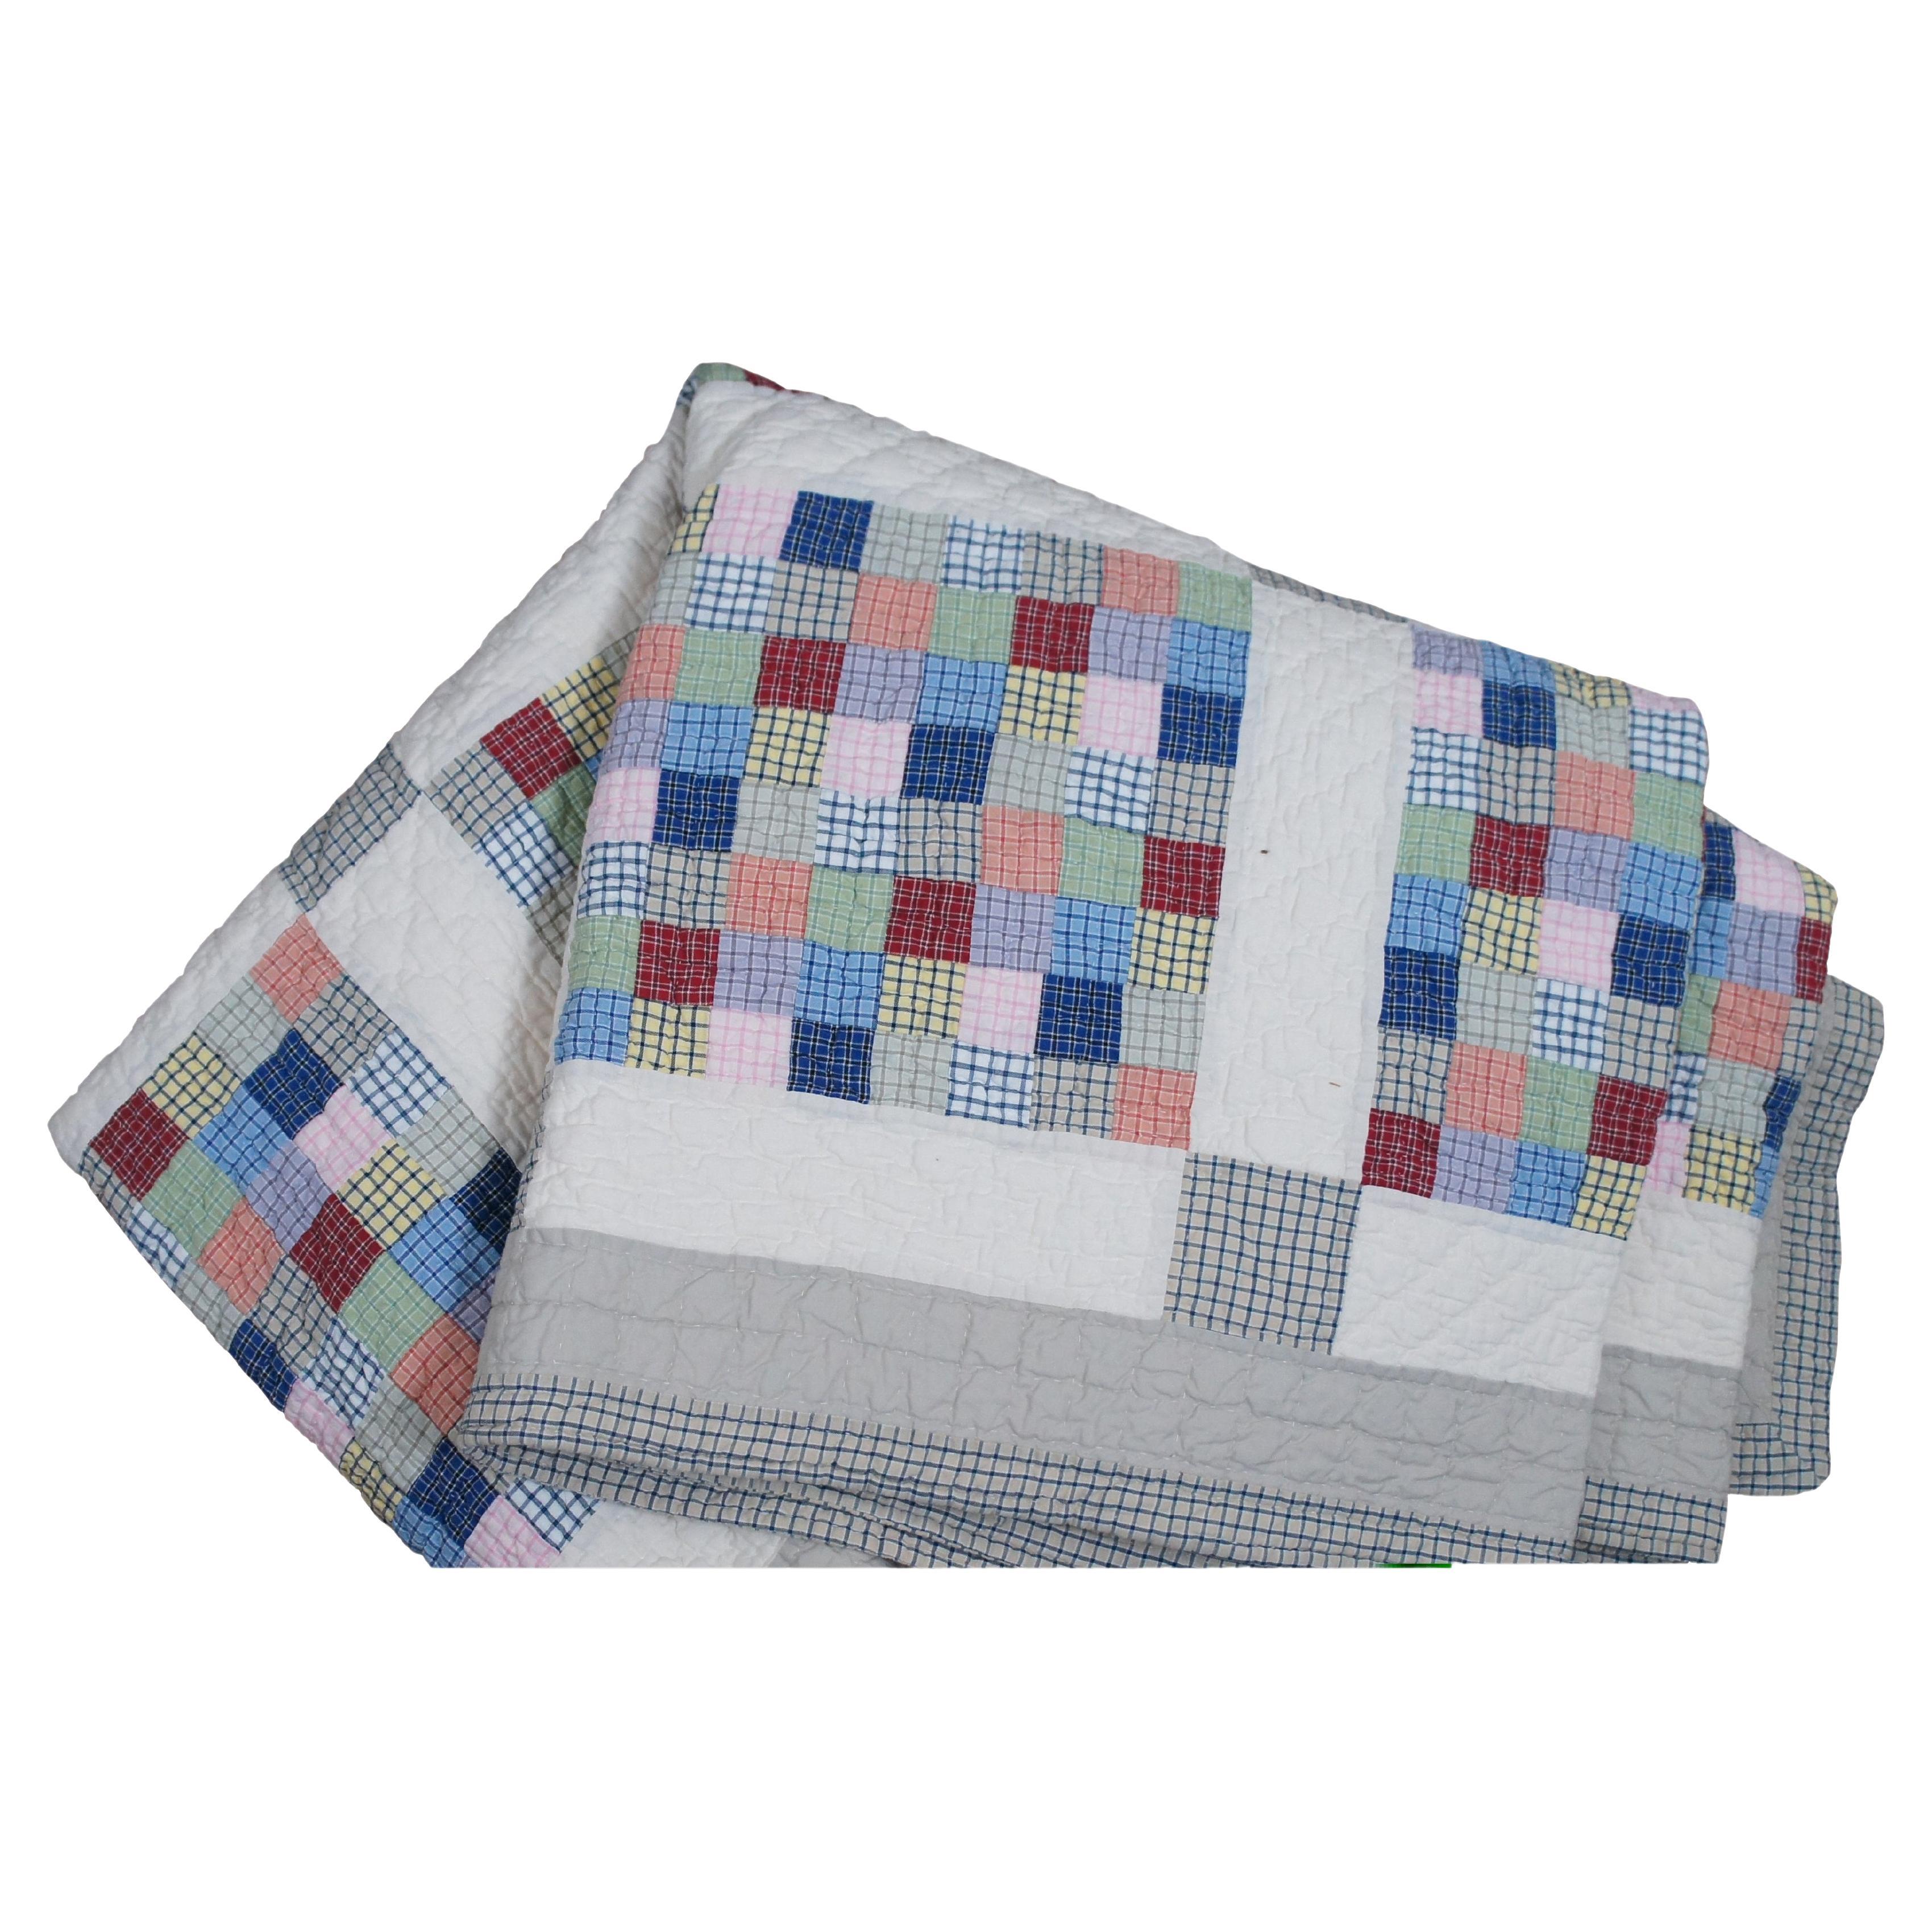 Antique Folk Art Stitched Geometric Patchwork Quilt Blanket Gingham Check For Sale